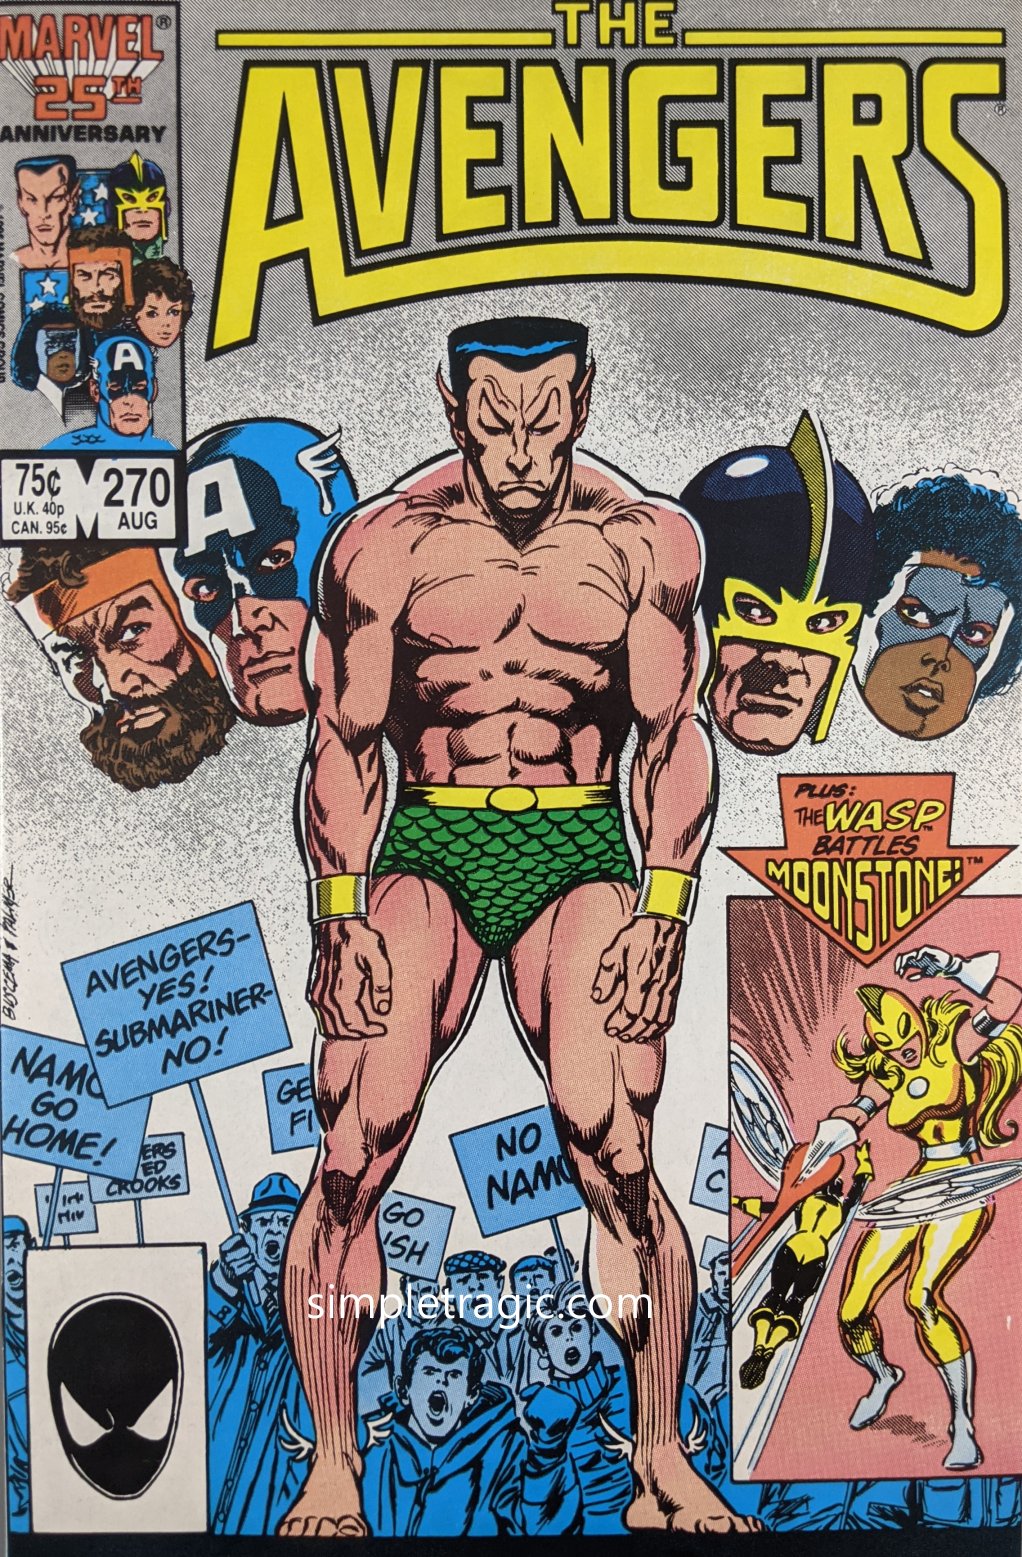 Avengers #270 Comic Book Cover Art